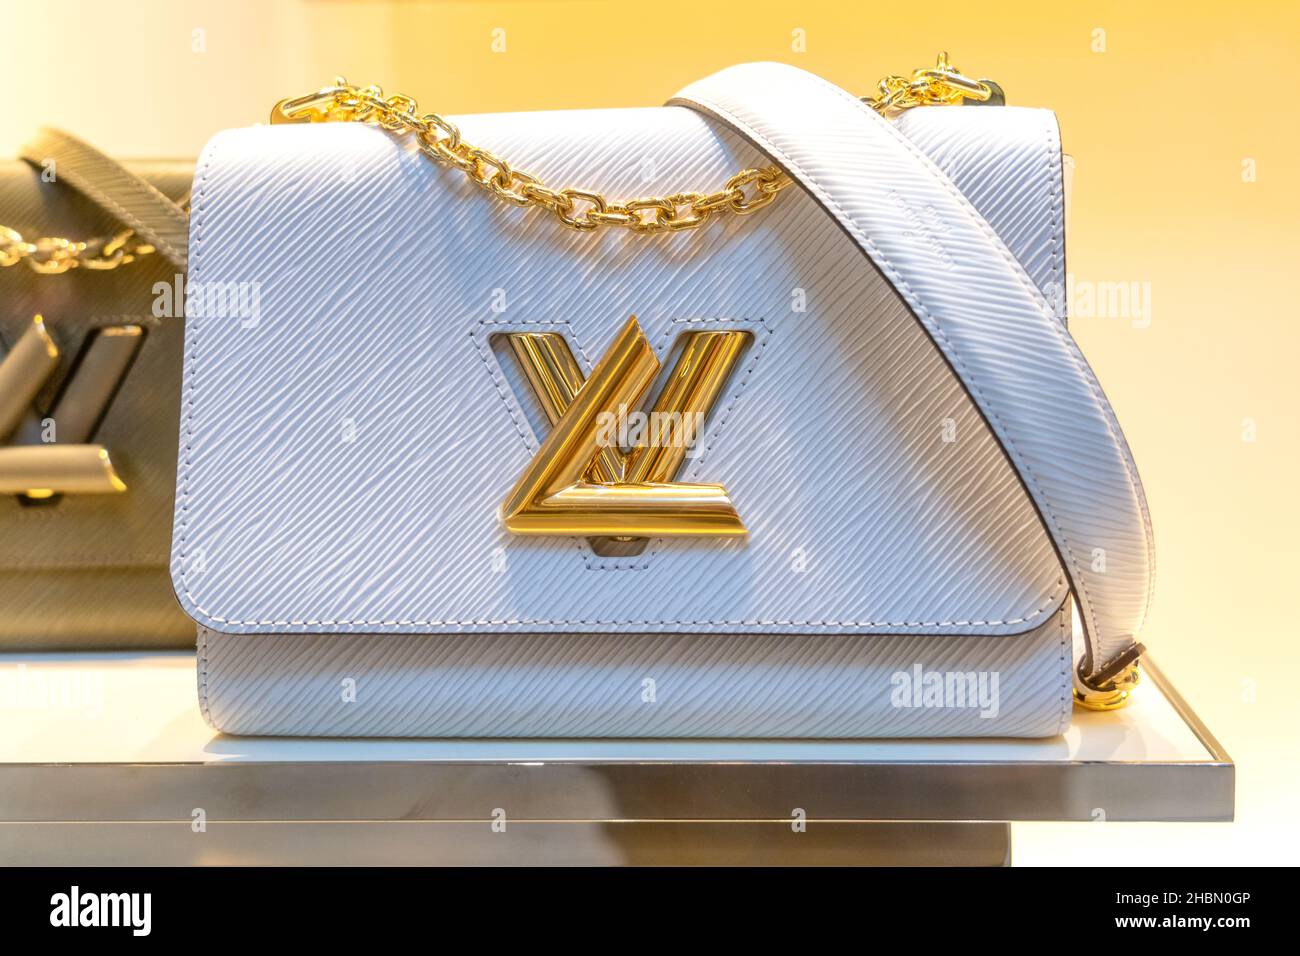 Yves Saint Laurent handbags | Shop Yves Saint Laurent handbags online at  GIGLIO.COM